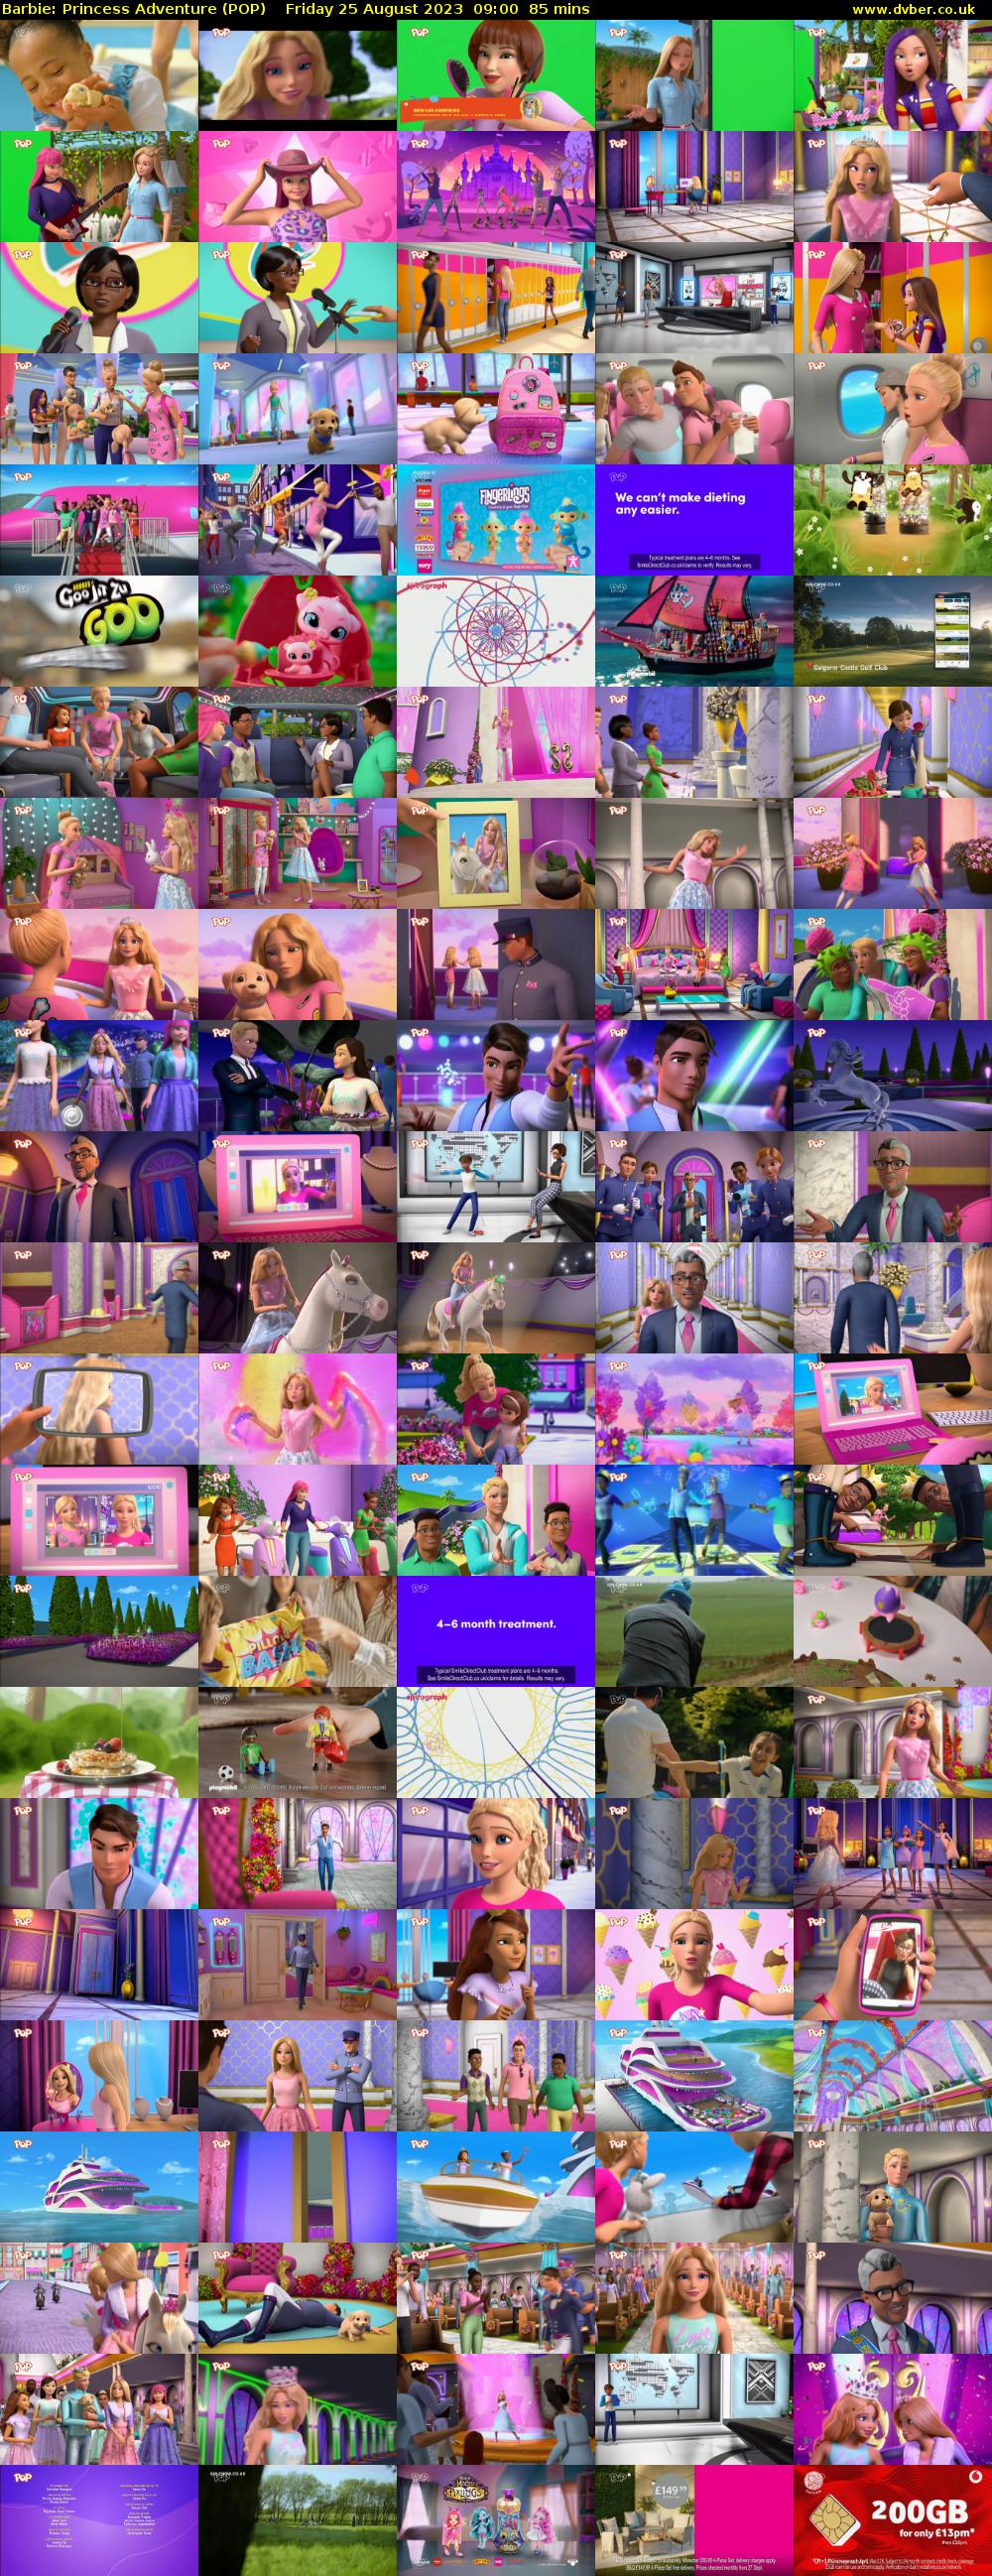 Barbie: Princess Adventure (POP) Friday 25 August 2023 09:00 - 10:25